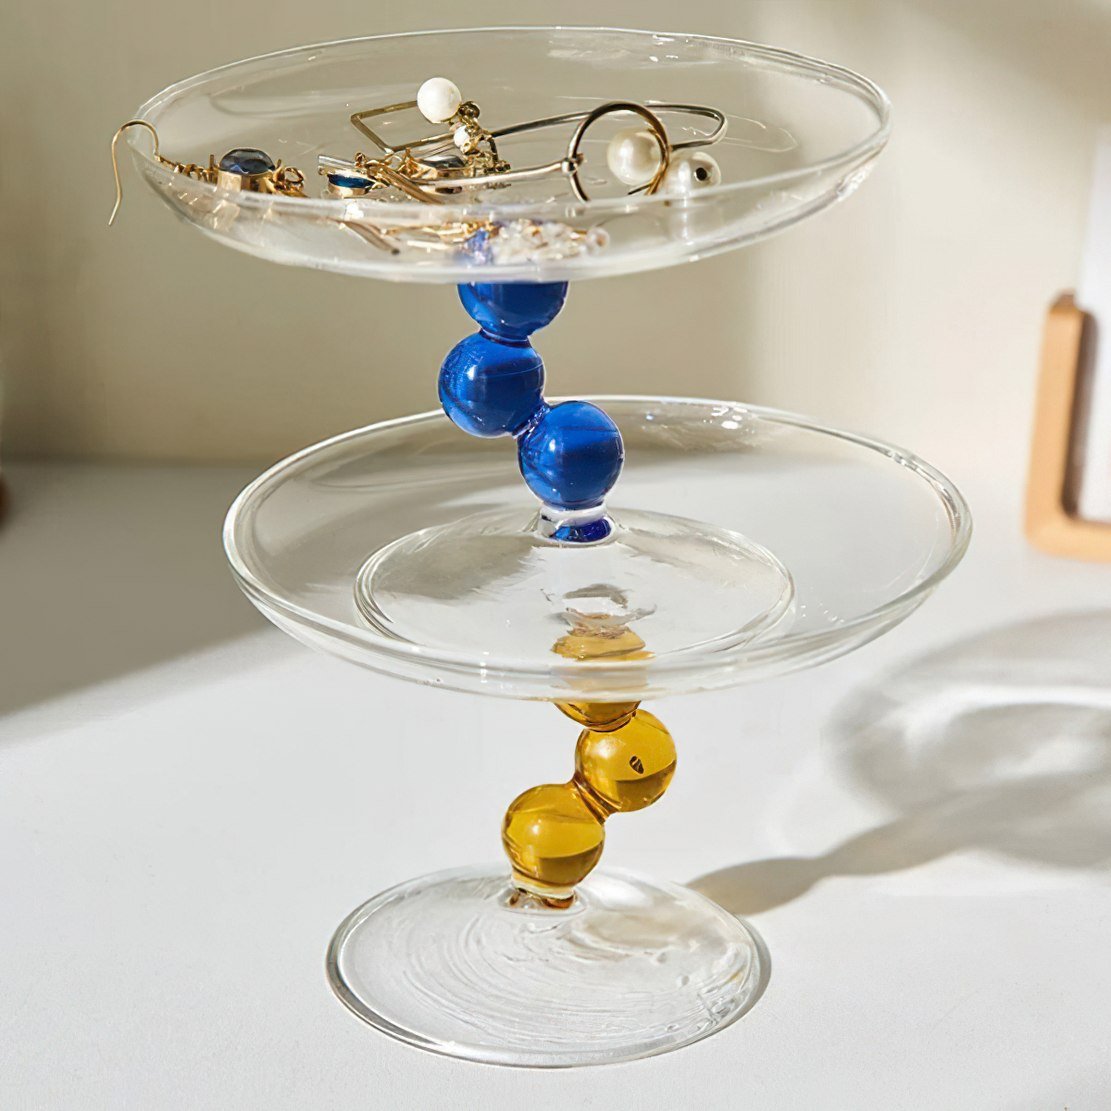 Pearl stem elevated glass jewellery trays